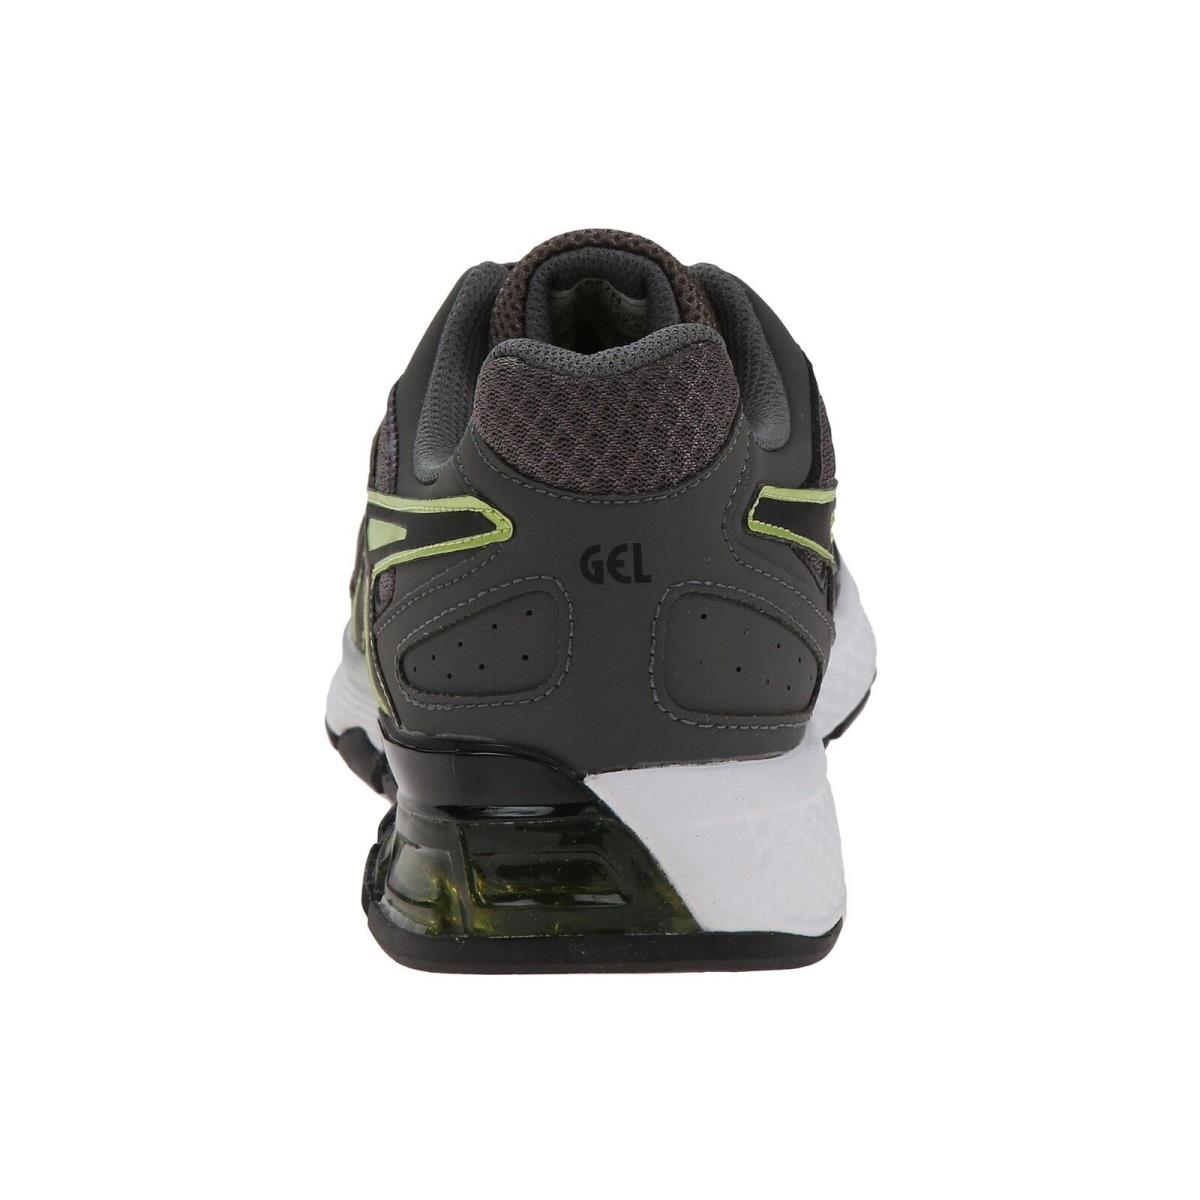 Men`s Asics Gel-defiant 2 Shoes S527N Size Charcoal/black/lim | 053510287409 - ASICS - Charcoal/Black/Lime Punch | SporTipTop